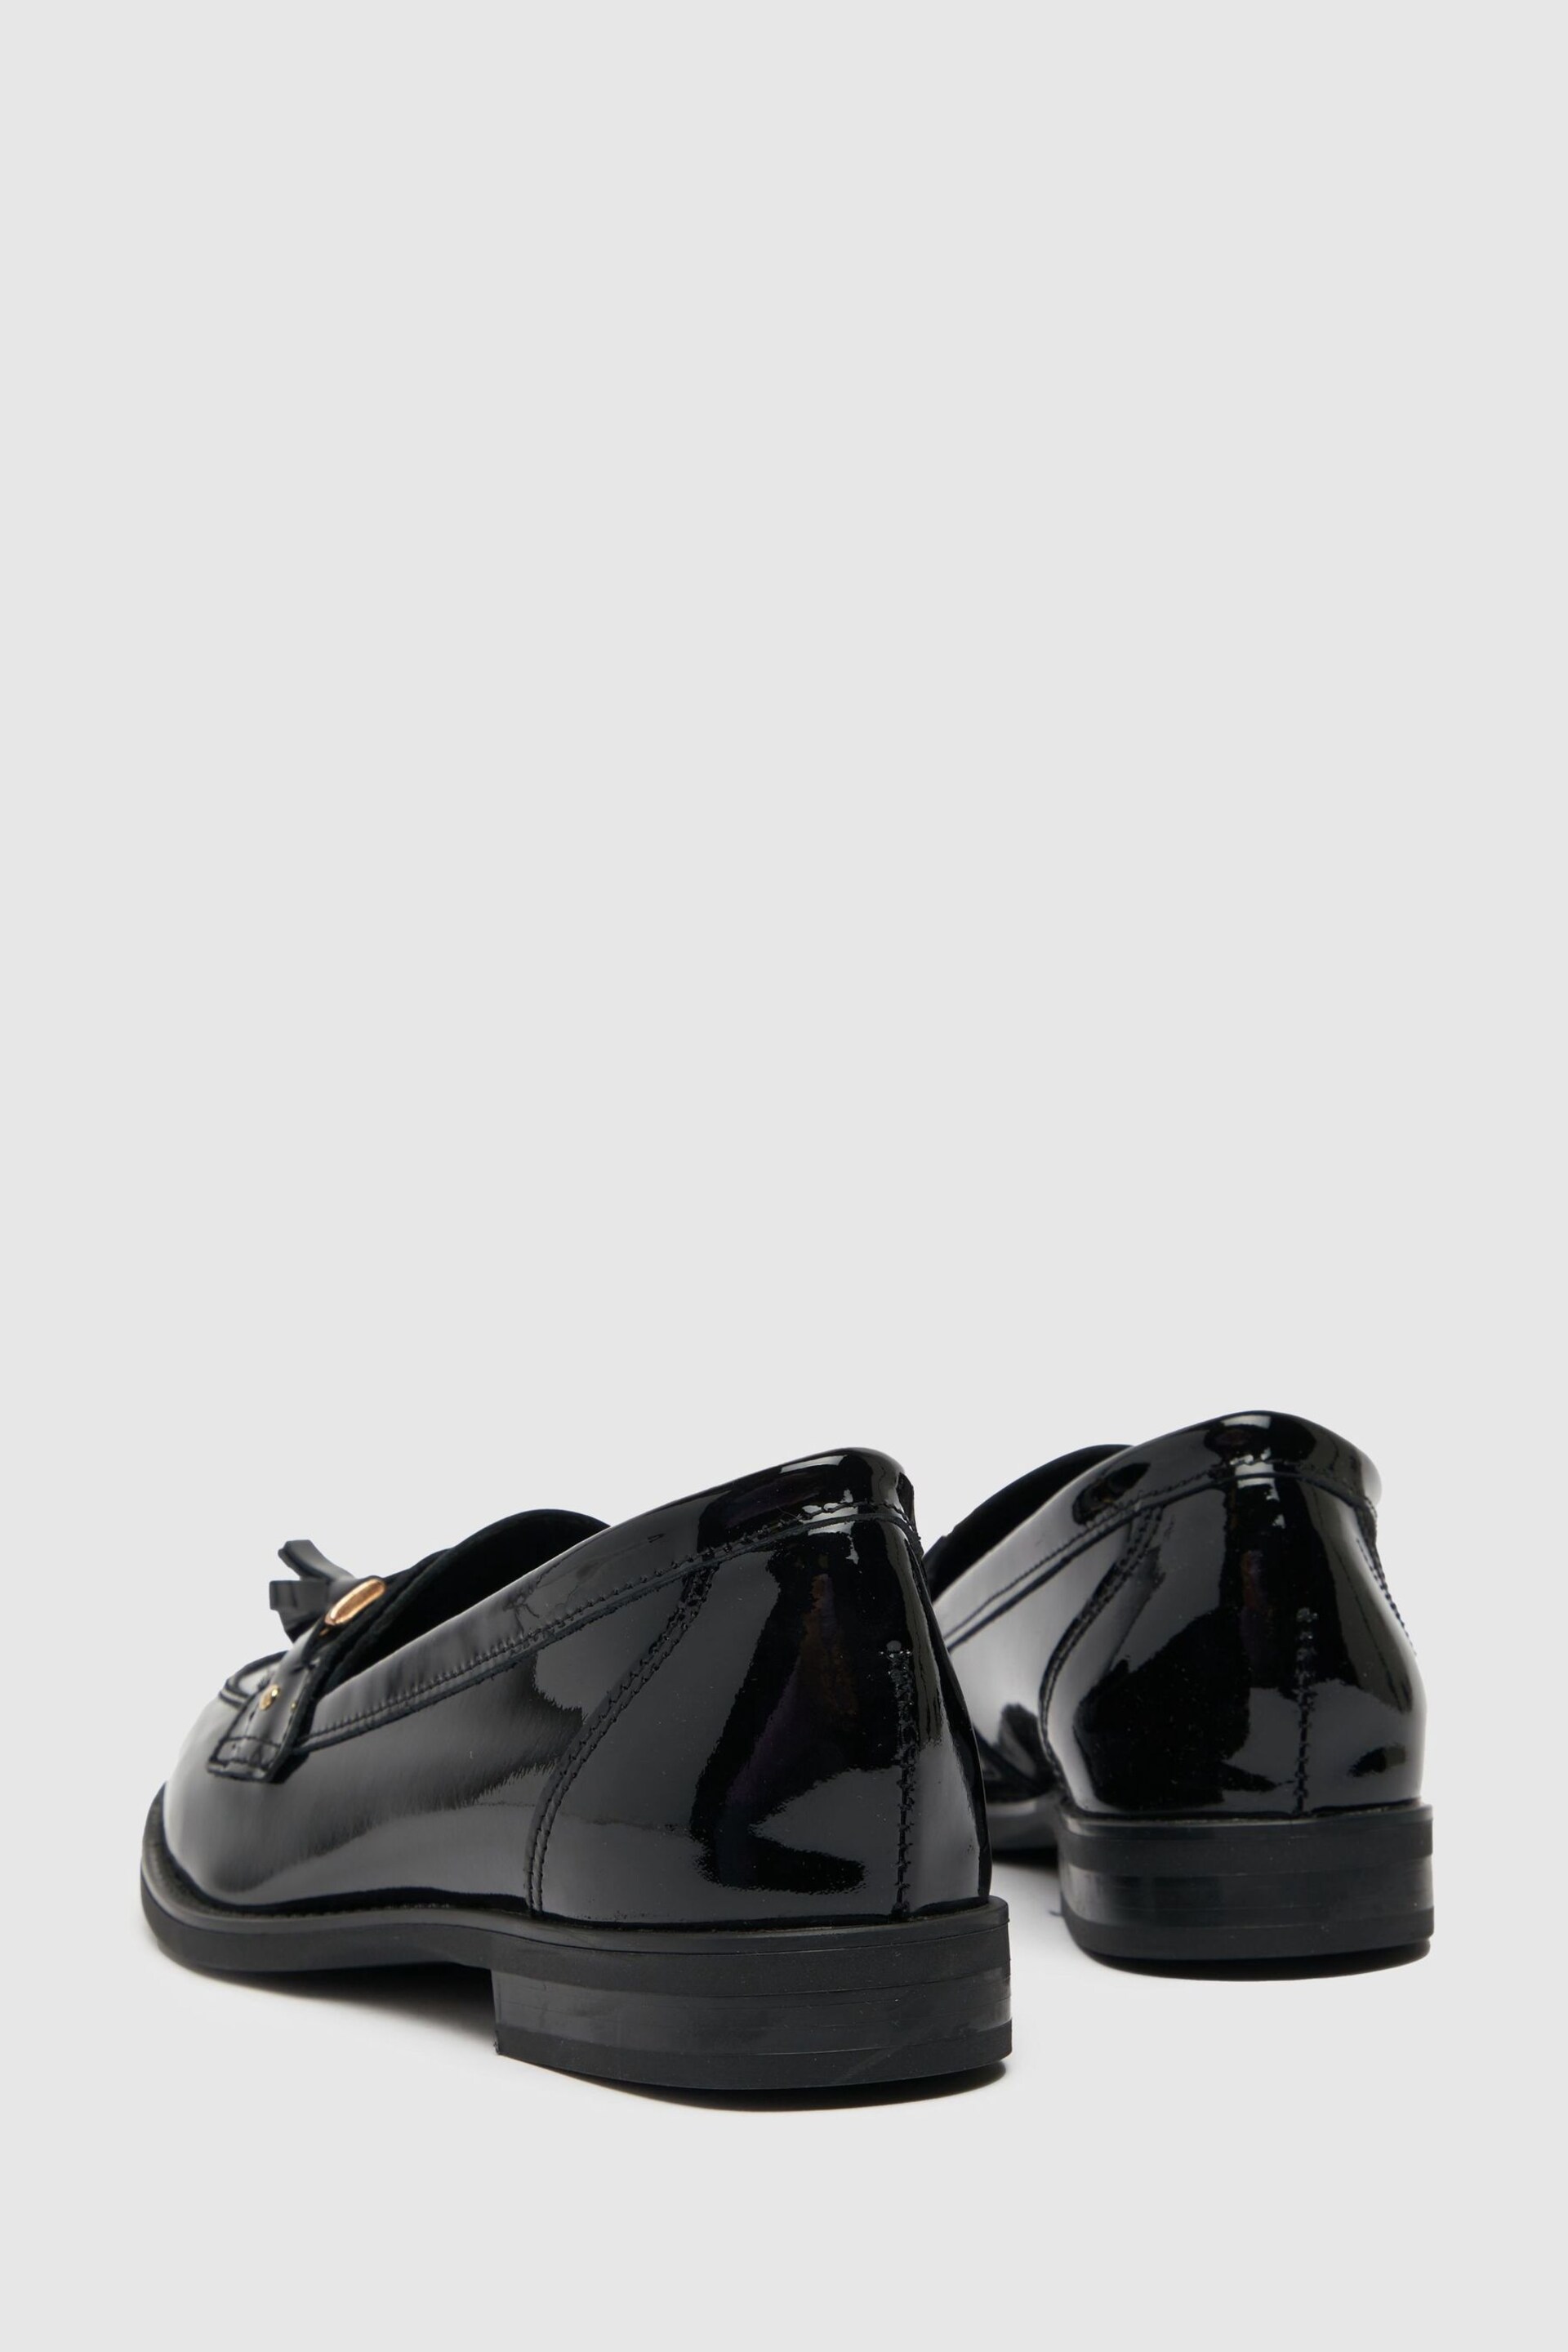 Schuh Liv Patent Tassel 	Black Loafers - Image 3 of 4